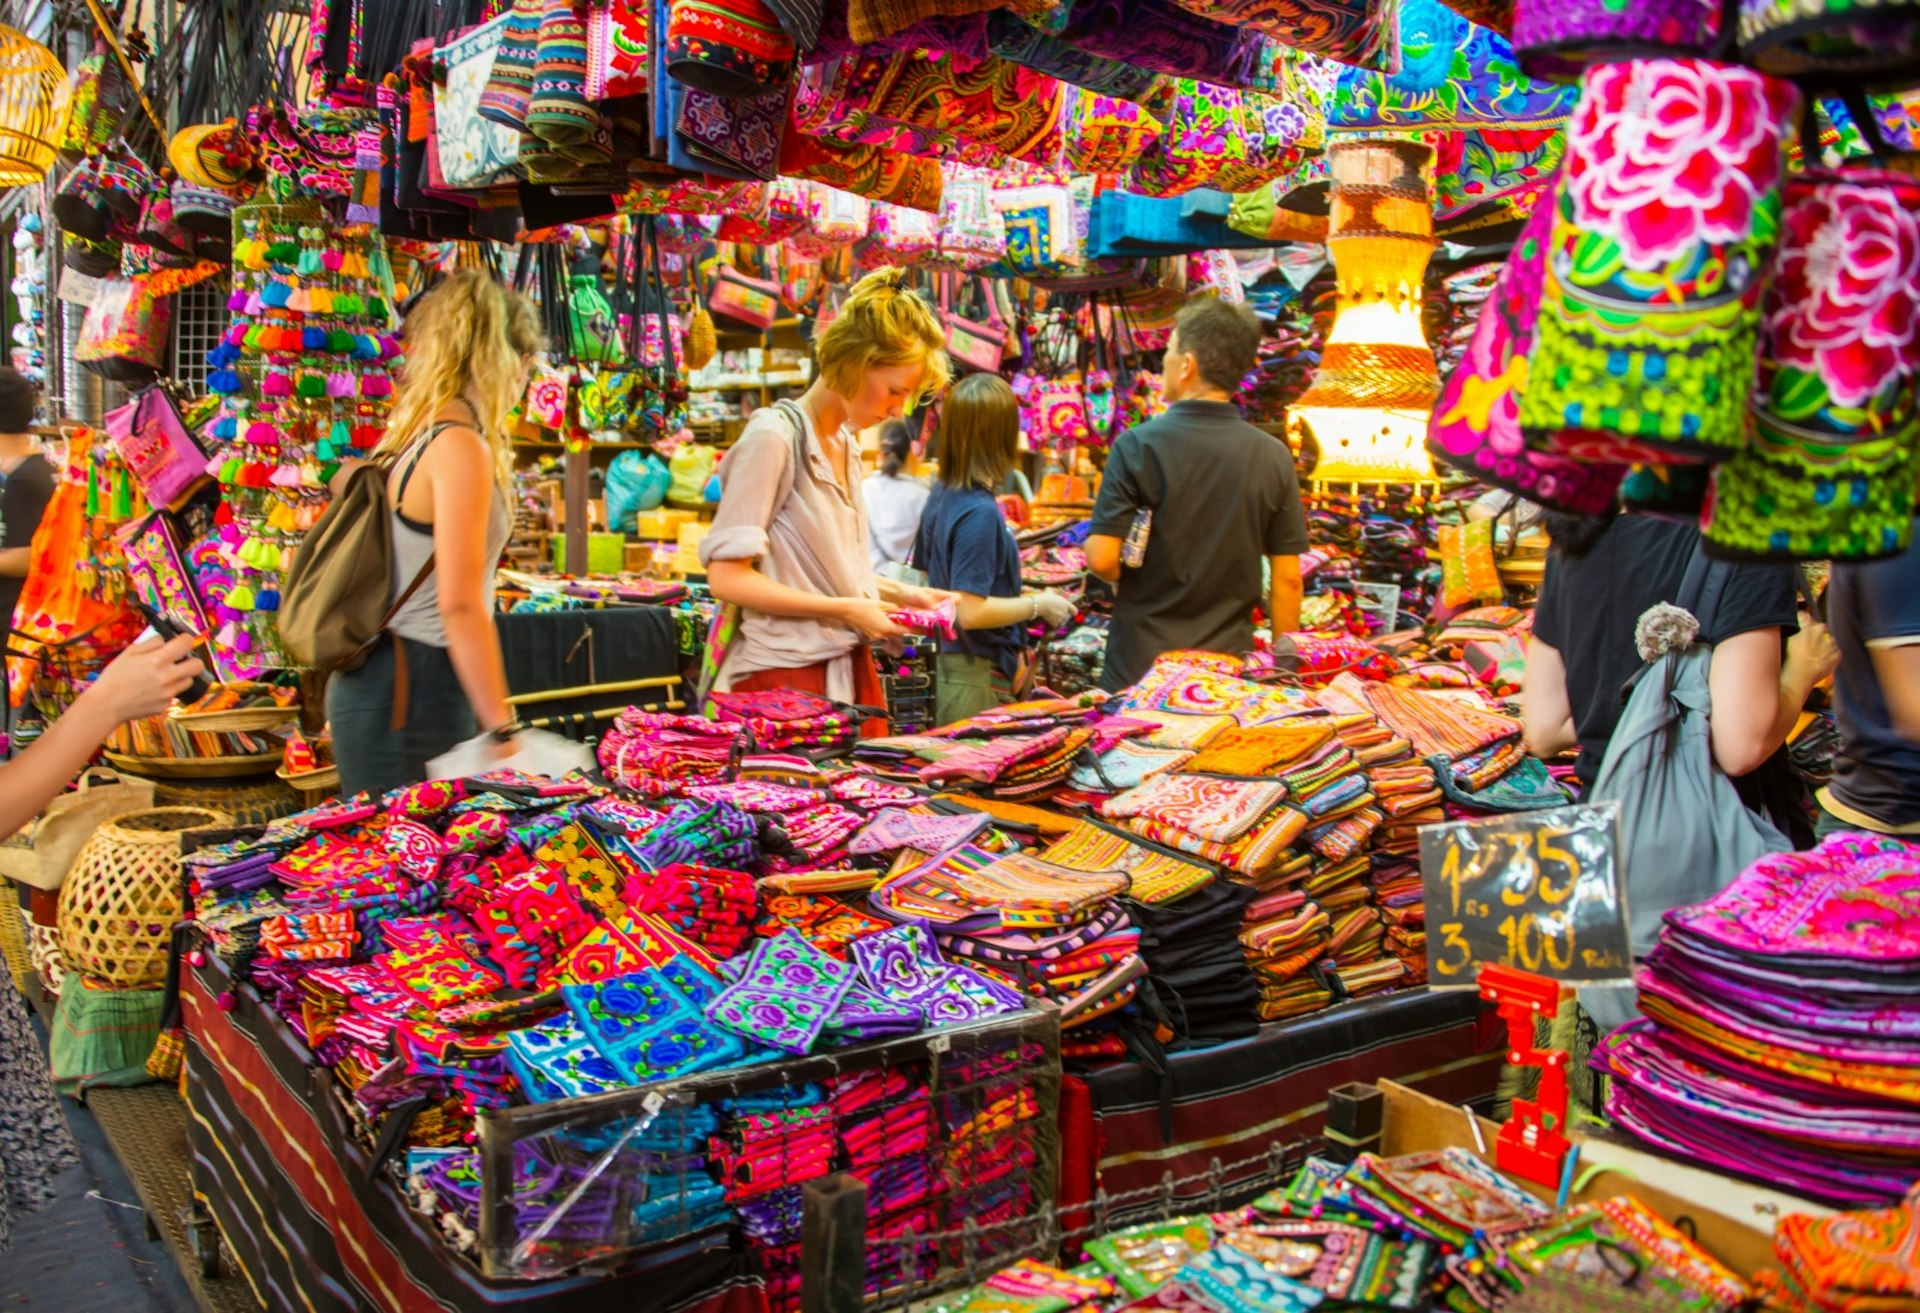 Visitors peruse colourful textiles on offer at Chatuchak Weekend Market in Bangkok © Vassamon Anansukkasem / Shutterstock